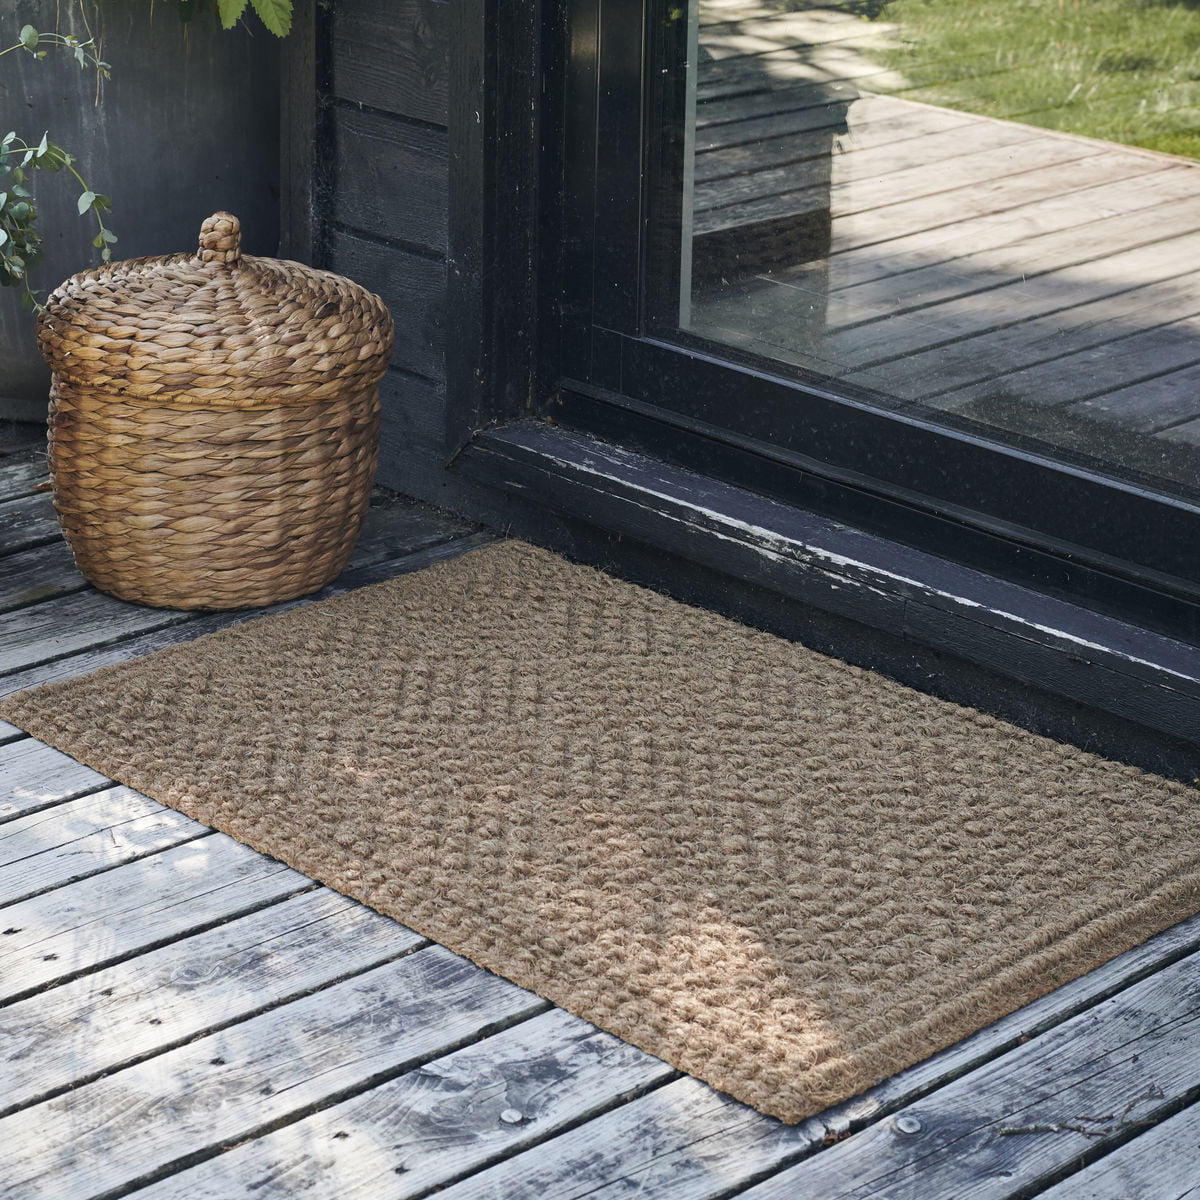 House Doctor - Clean Doormat, 90 x 60 cm, coconut fibre, natural